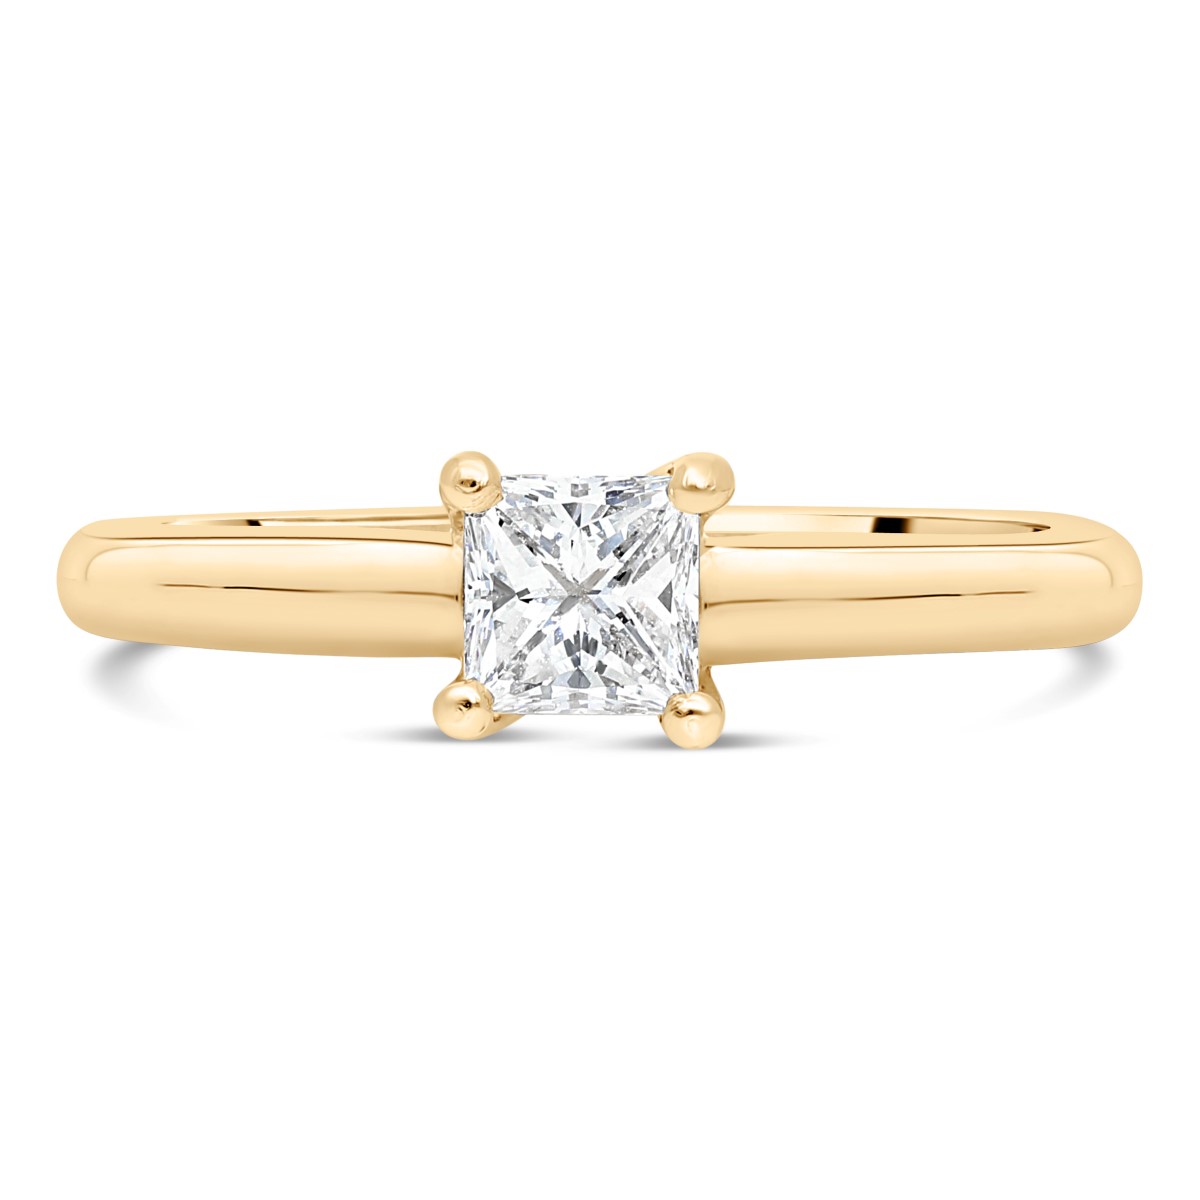 st-martin-pr-solitaires-diamants-certifies-style-classique-or-jaune-750-